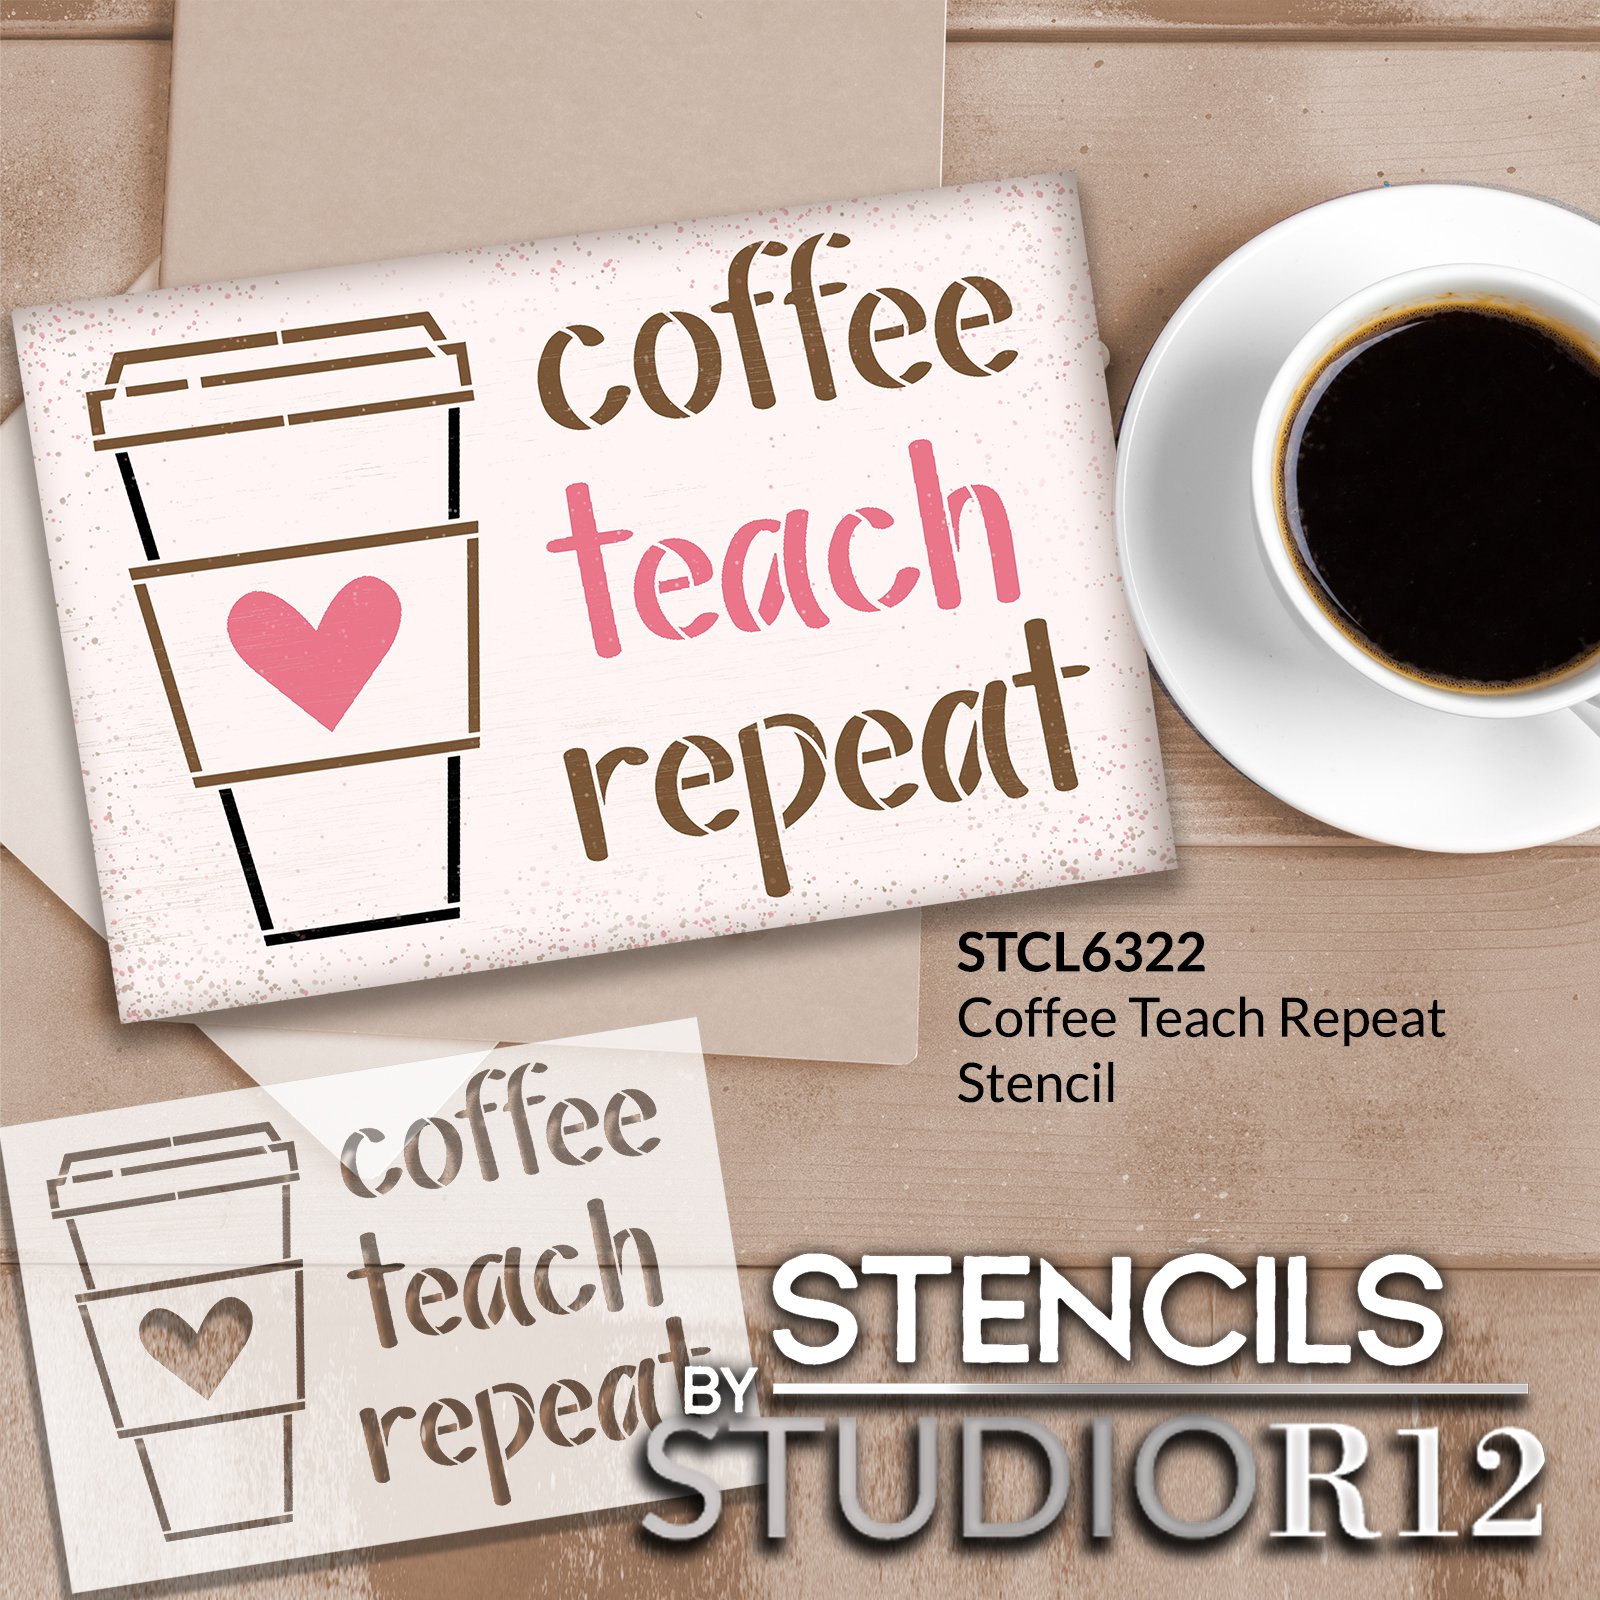 Coffee Teach Repeat Stencil by StudioR12 | Craft DIY Classroom Decor | Paint Teacher Wood Sign | Reusable Mylar Template | Select Size